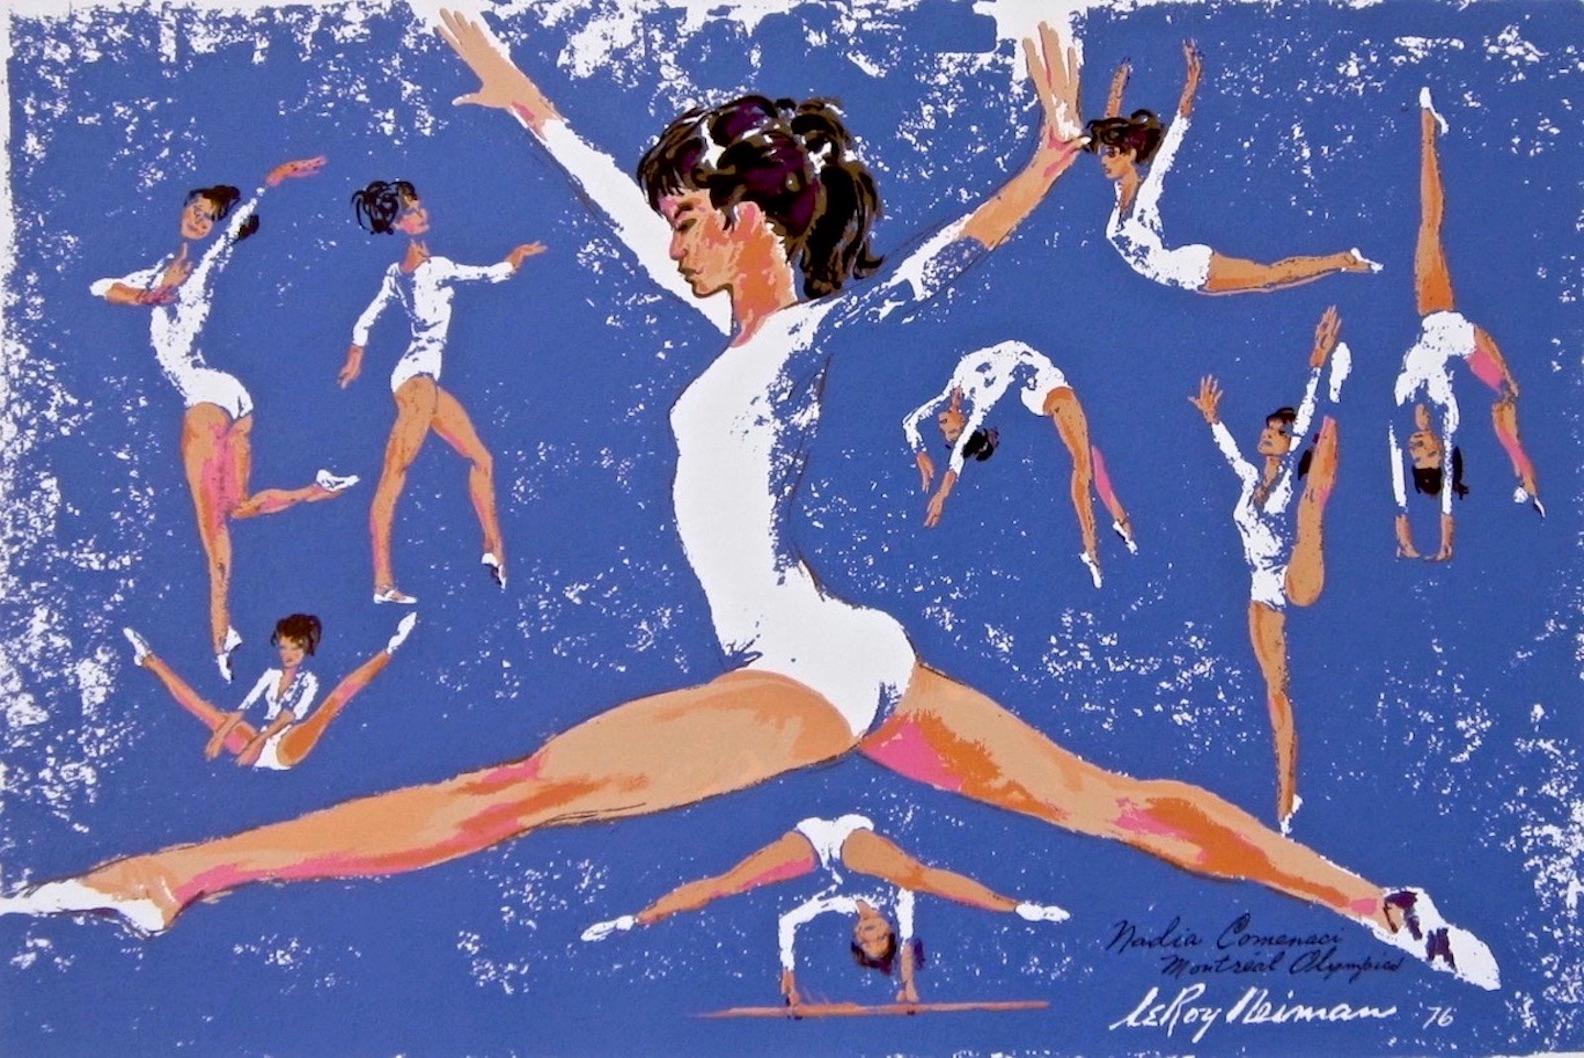 Leroy Neiman Figurative Print - Nadia, Comaneci Montreal Olympics Poster, 1976